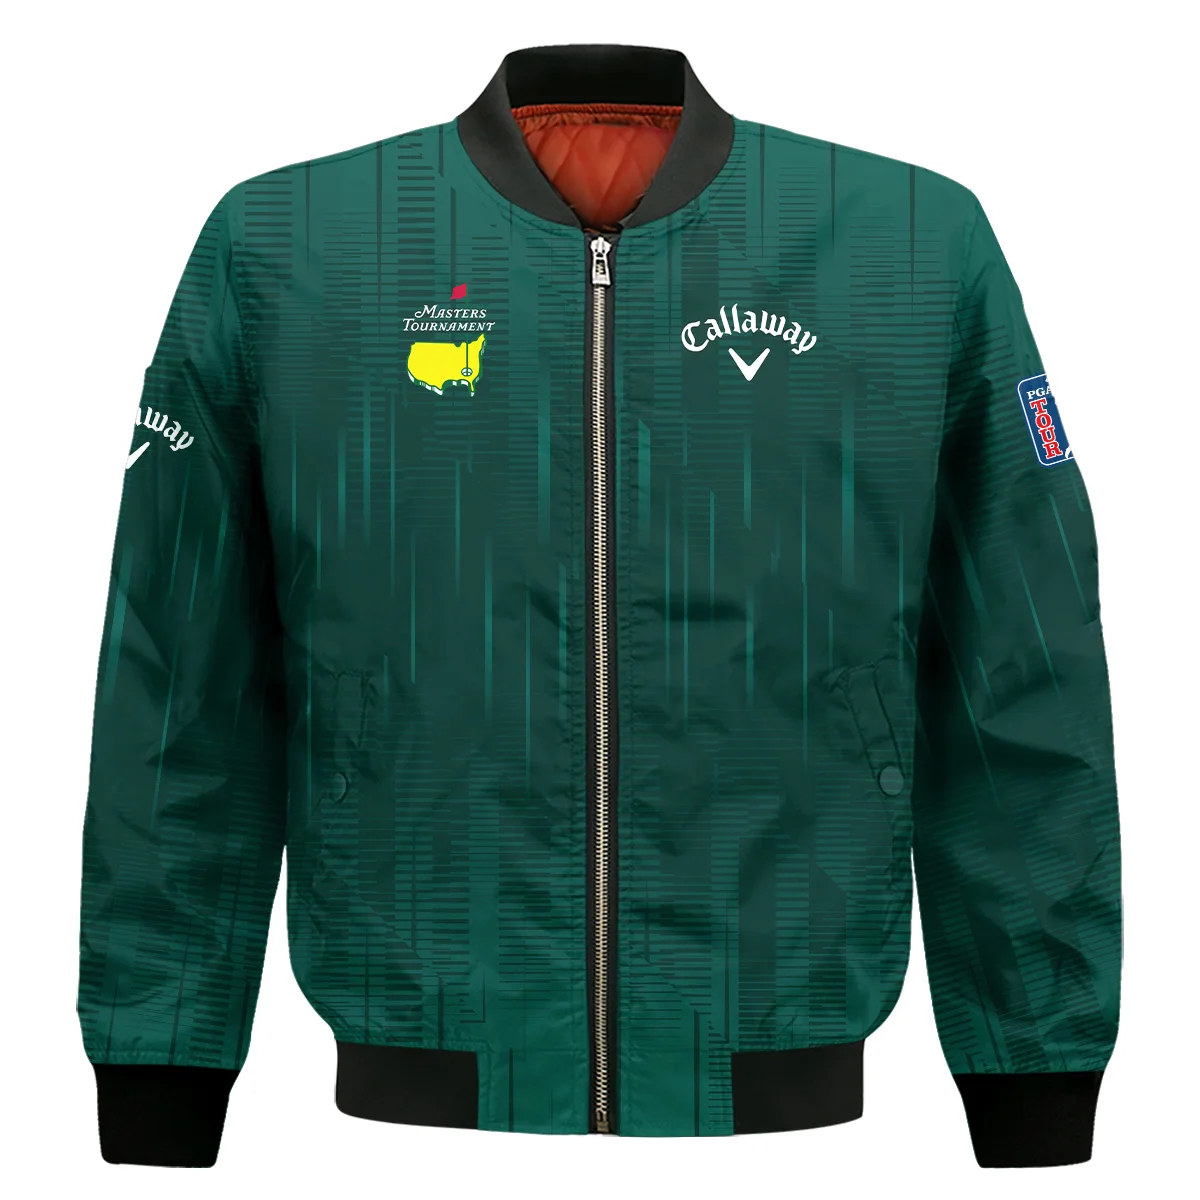 Masters Tournament Callaway Dark Green Gradient Stripes Pattern Bomber Jacket Style Classic Bomber Jacket